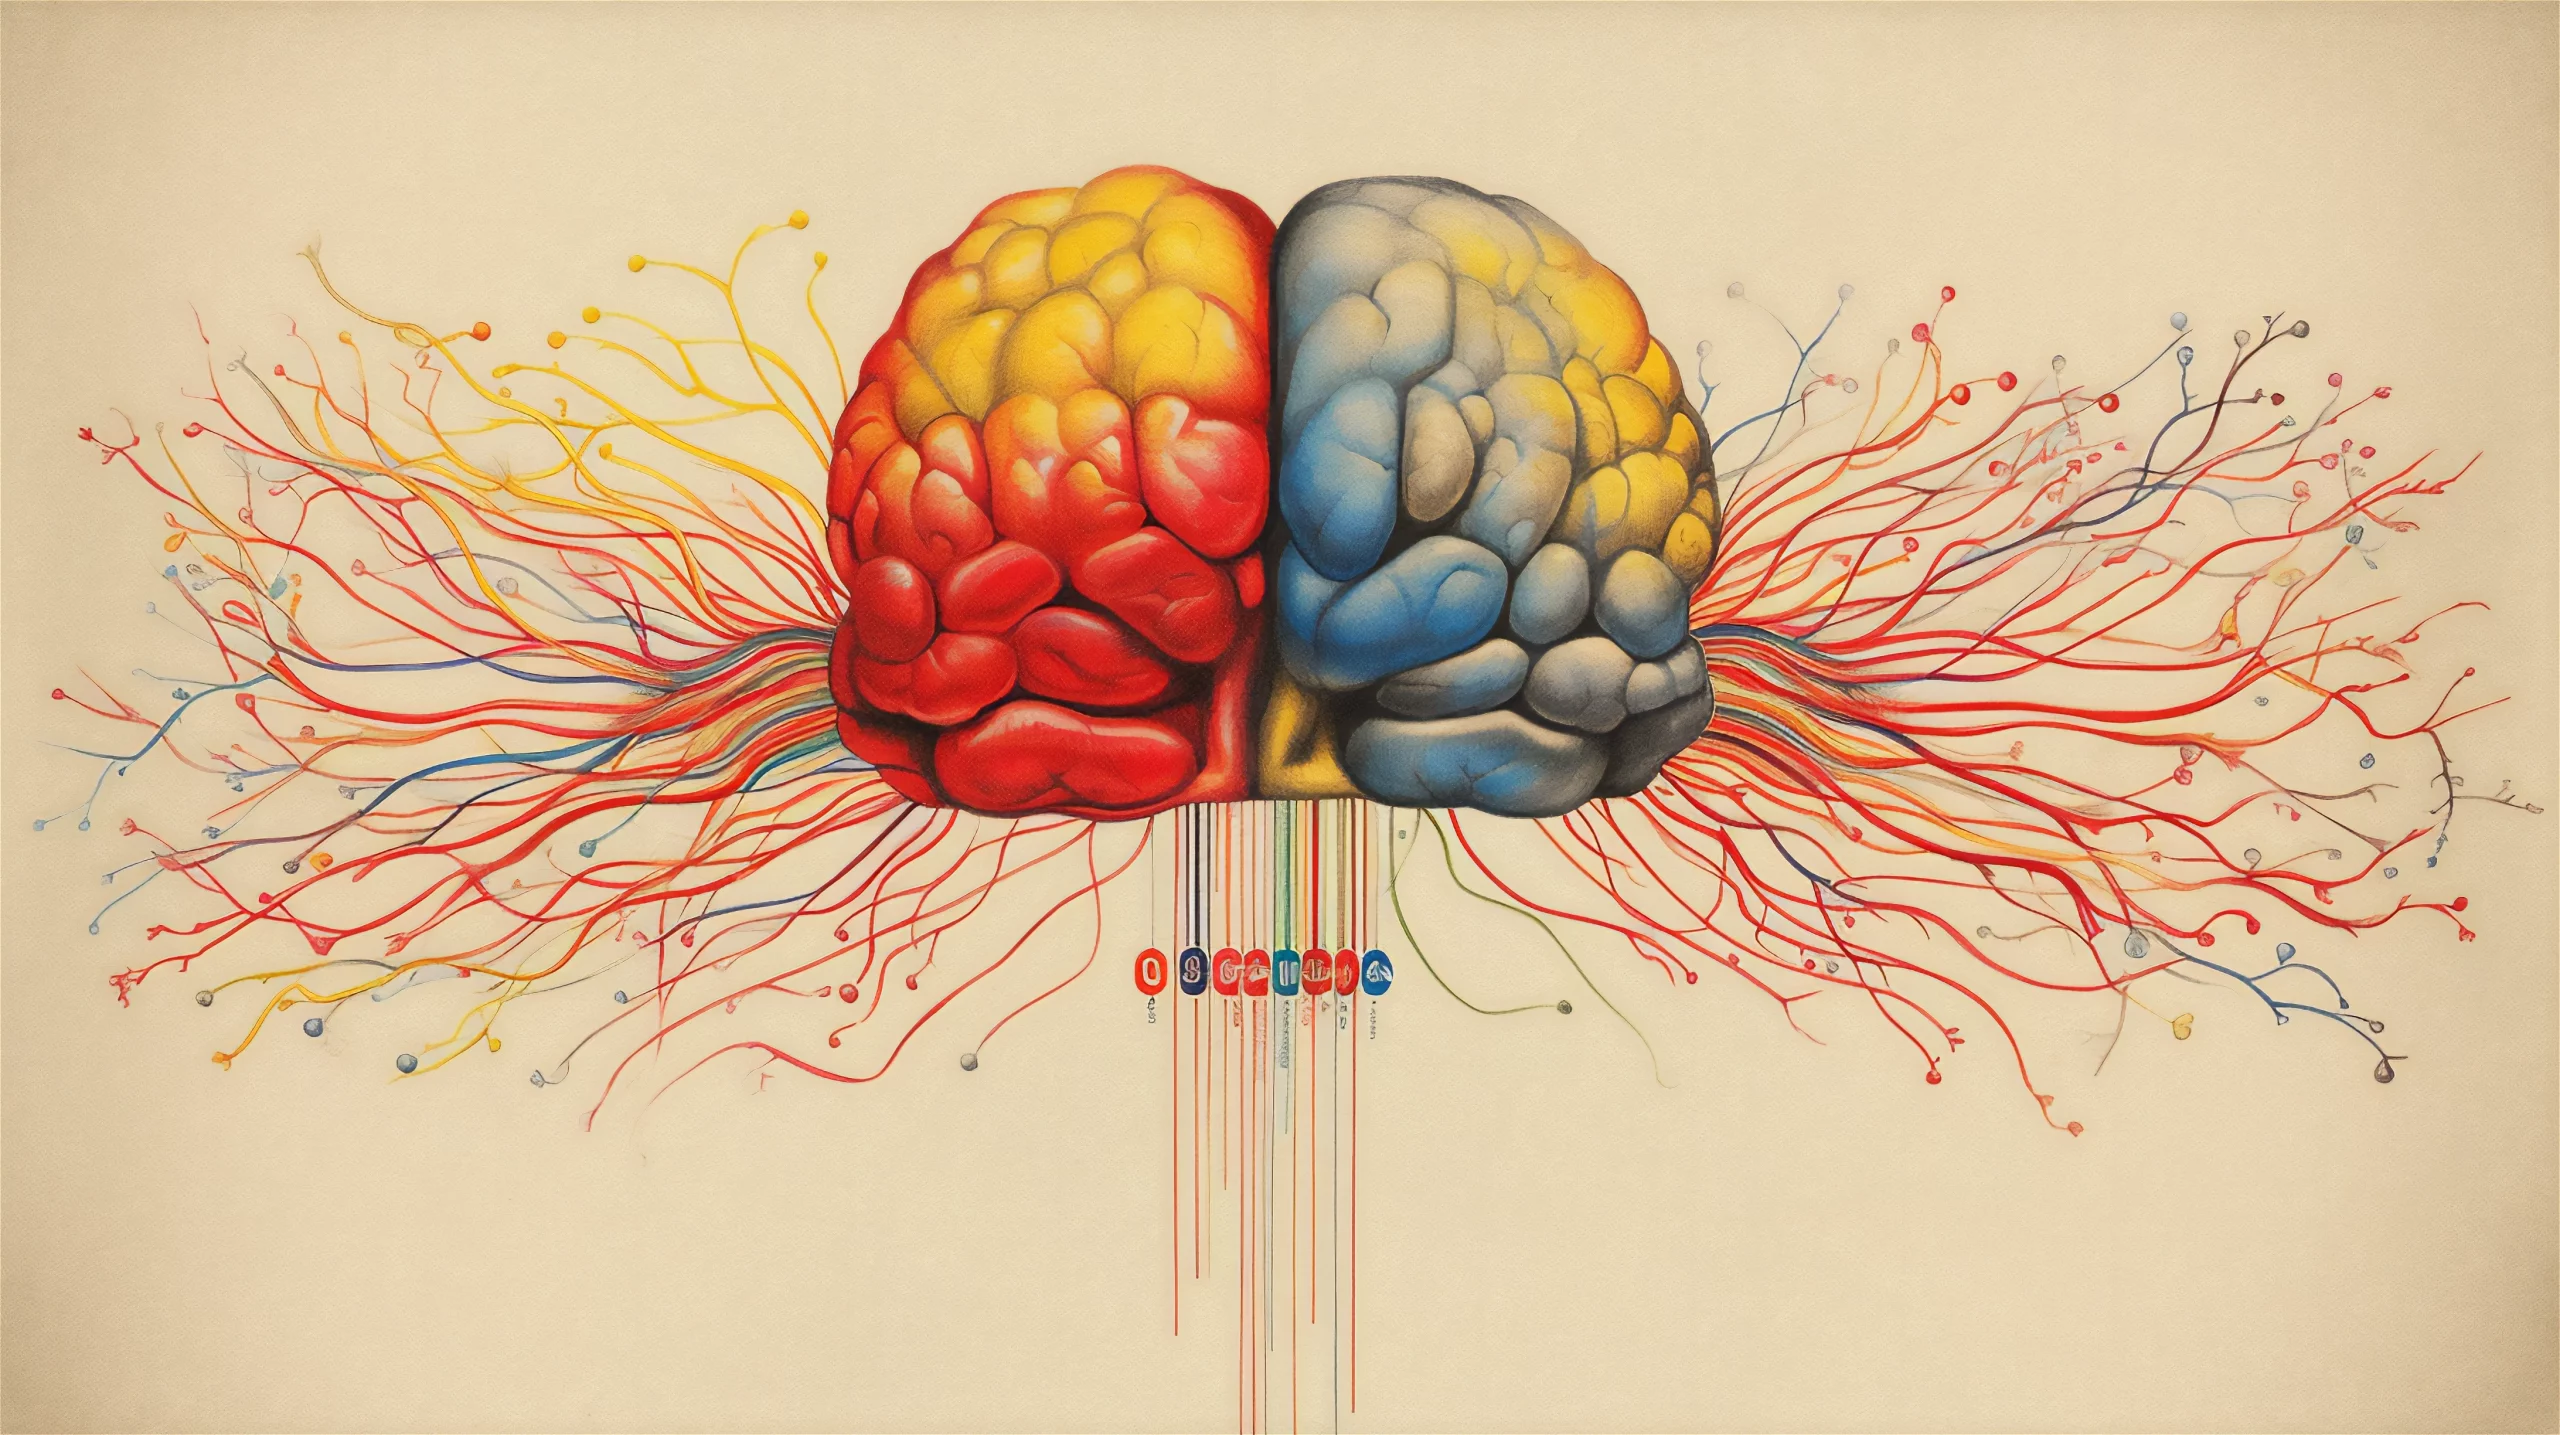 The Neuron – Foundations of Neuroscience